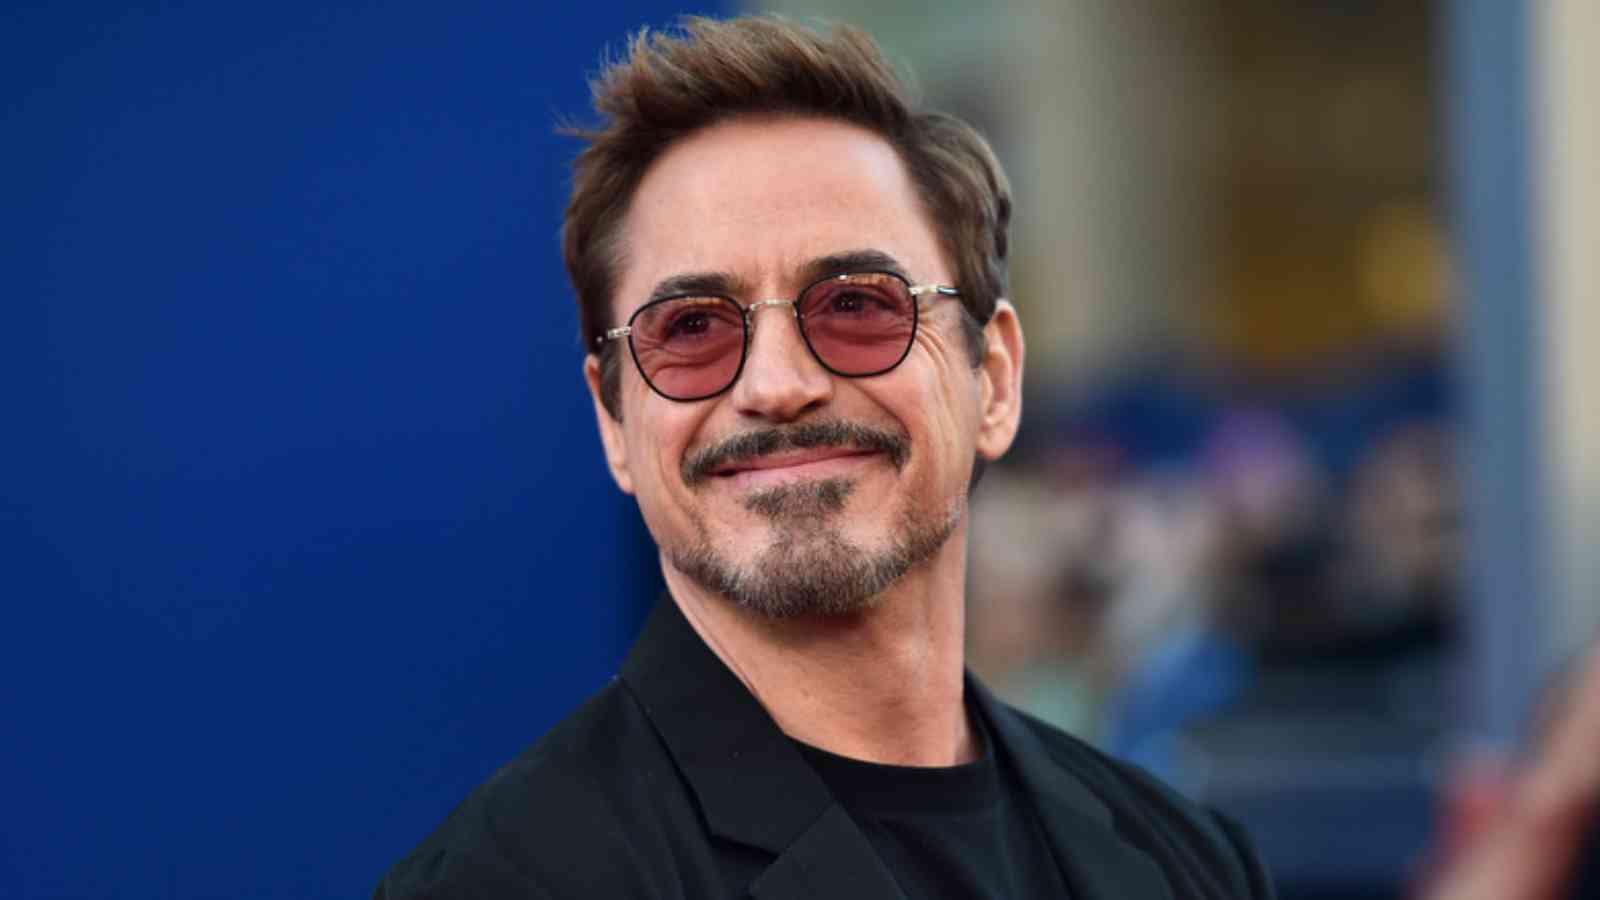 Robert Downey Jr. Biography: Age, Height, Birthday, Family, Net Worth